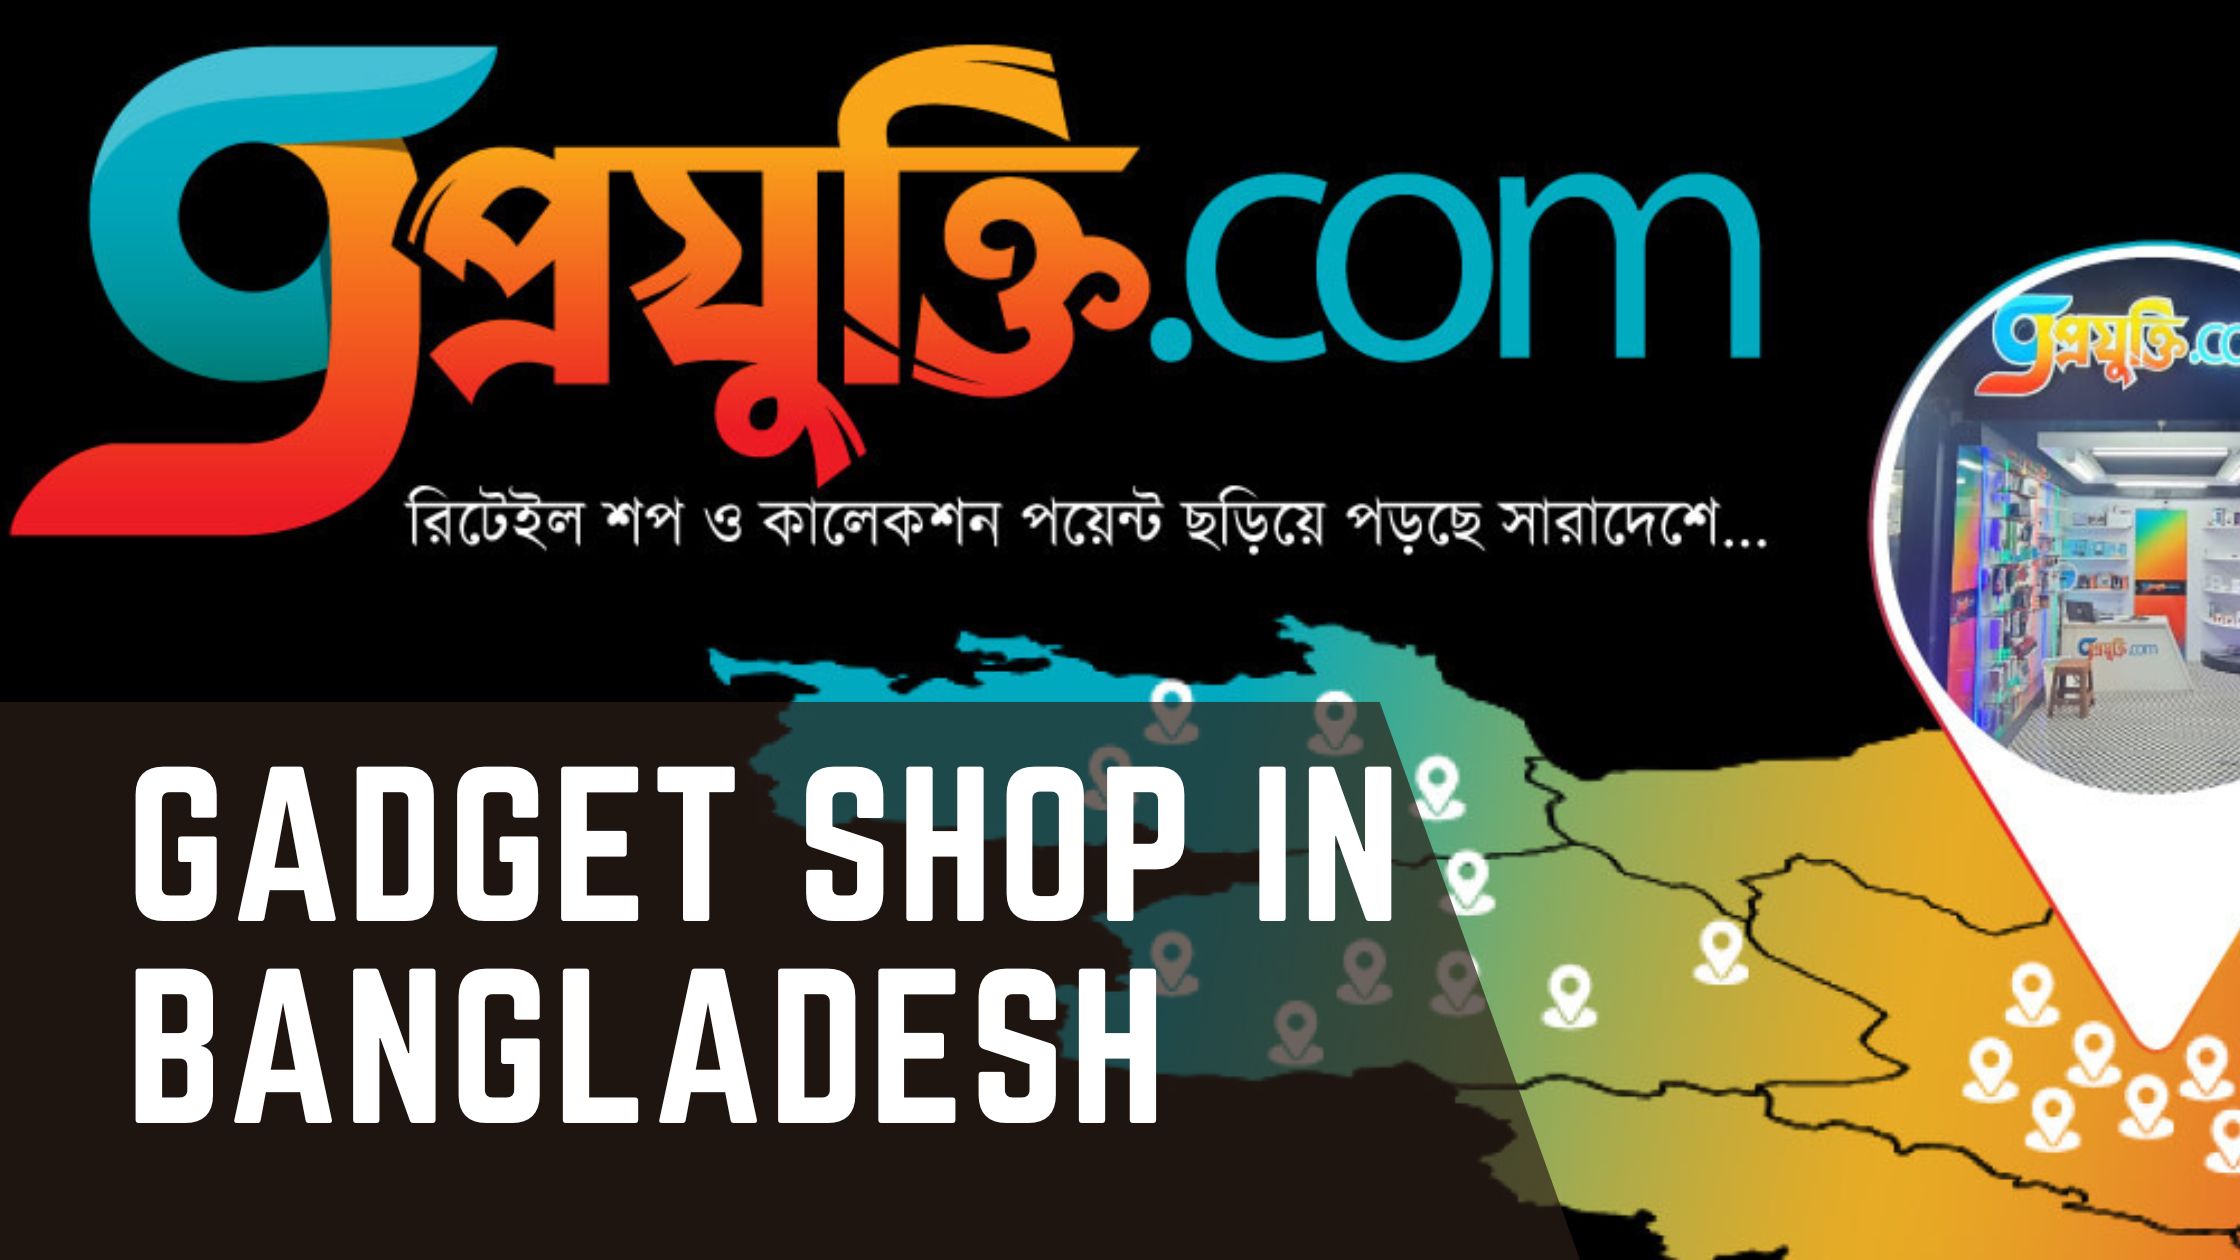 Gadget Shop in Bangladesh